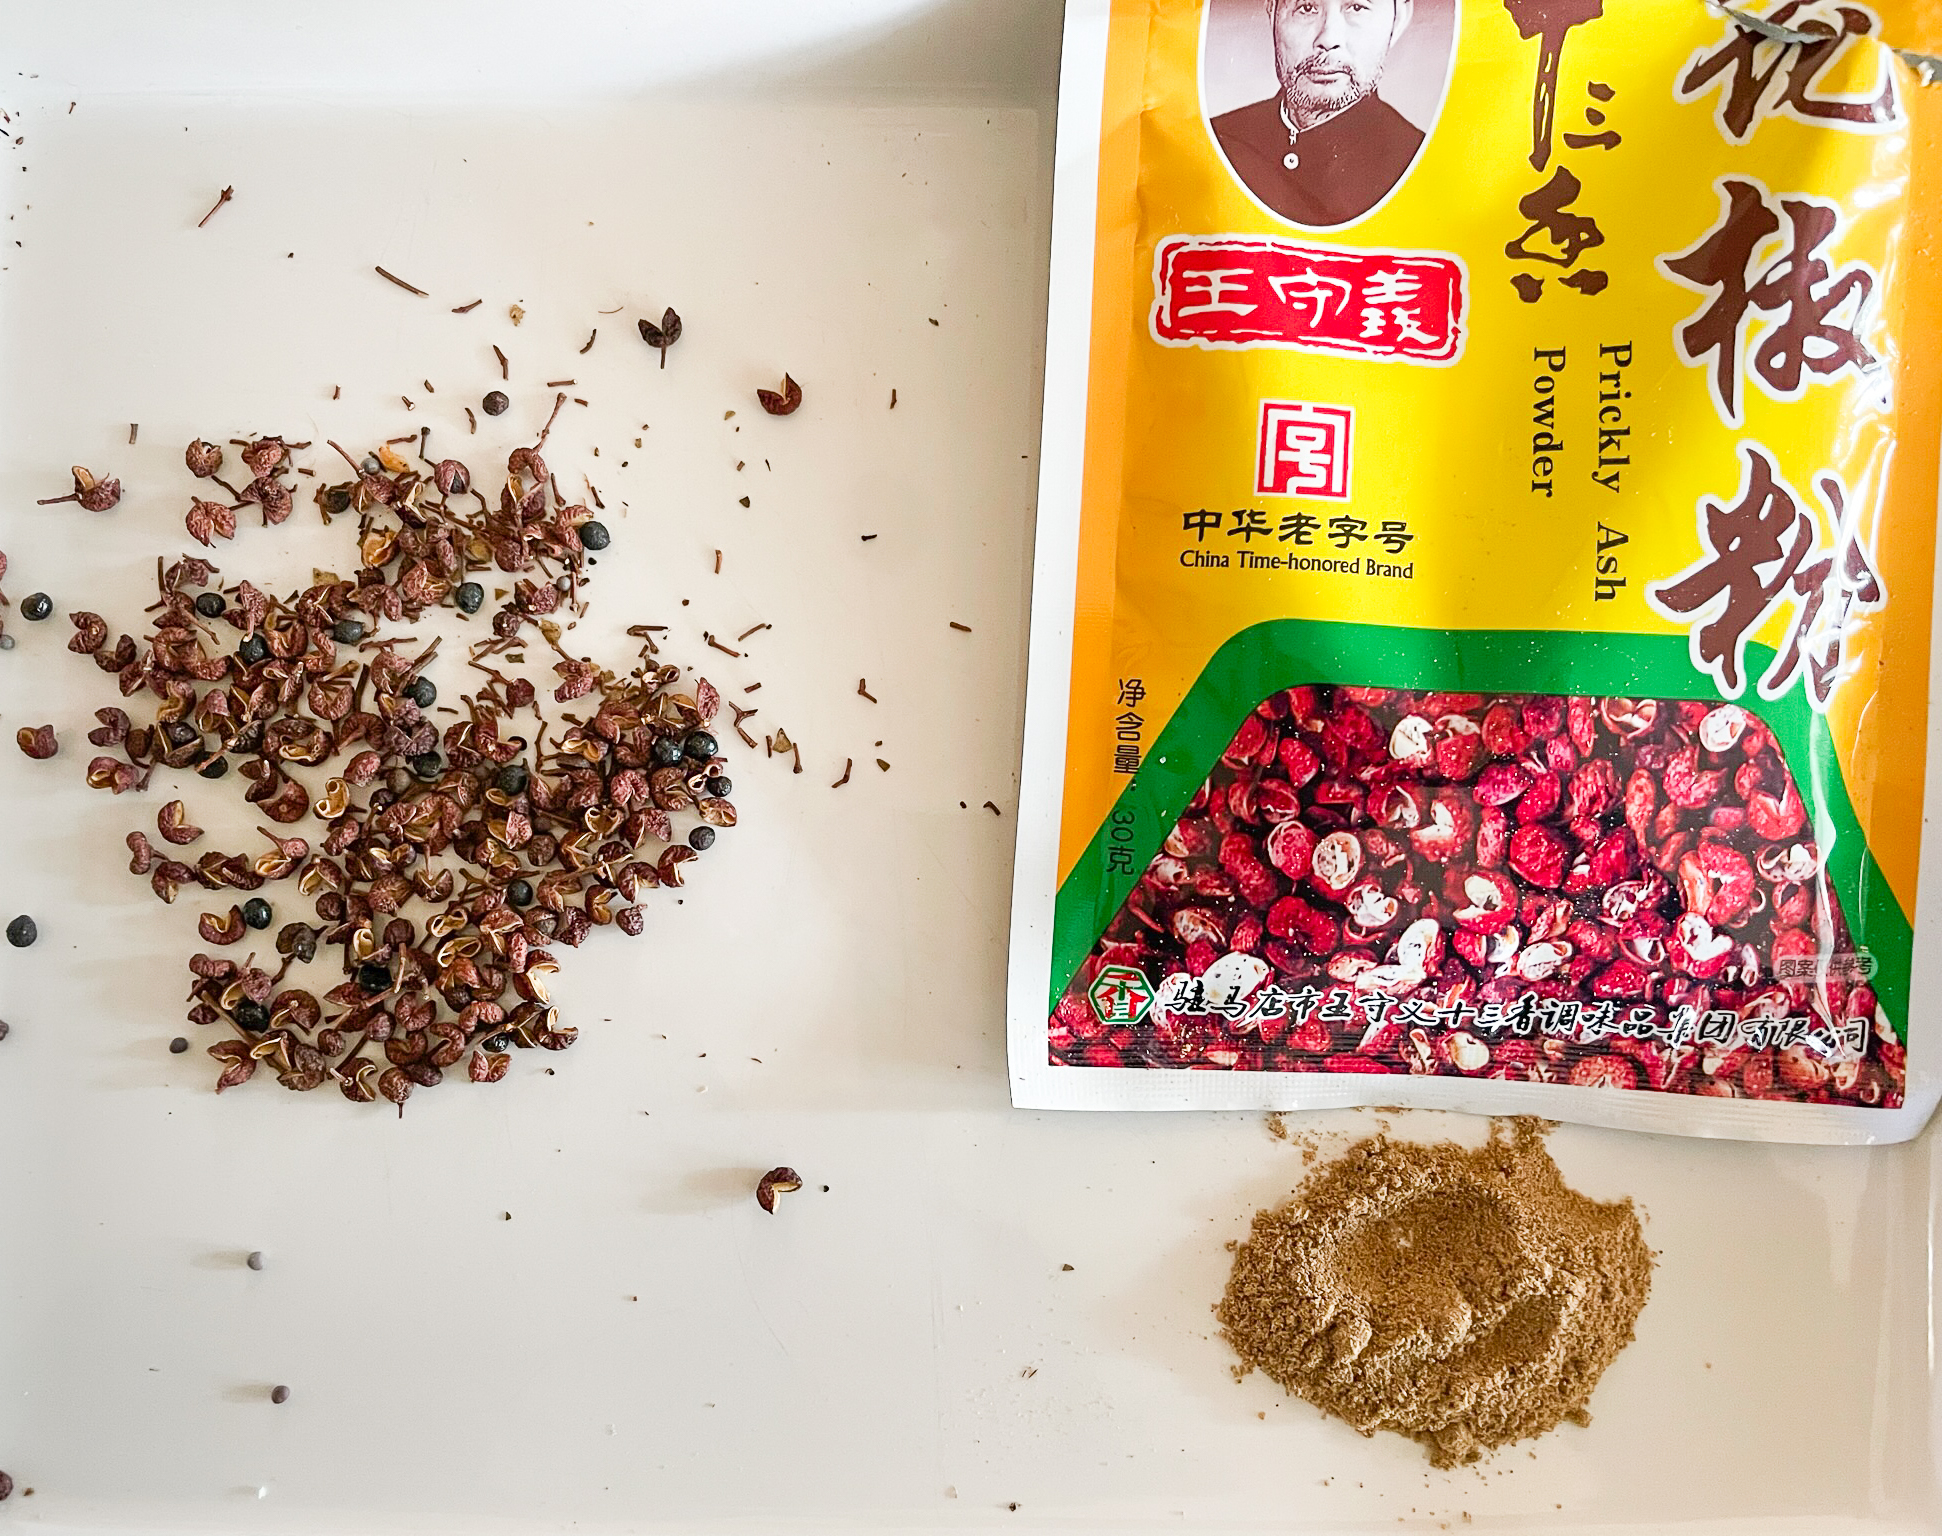 Sichuan peppercorns and ground powder